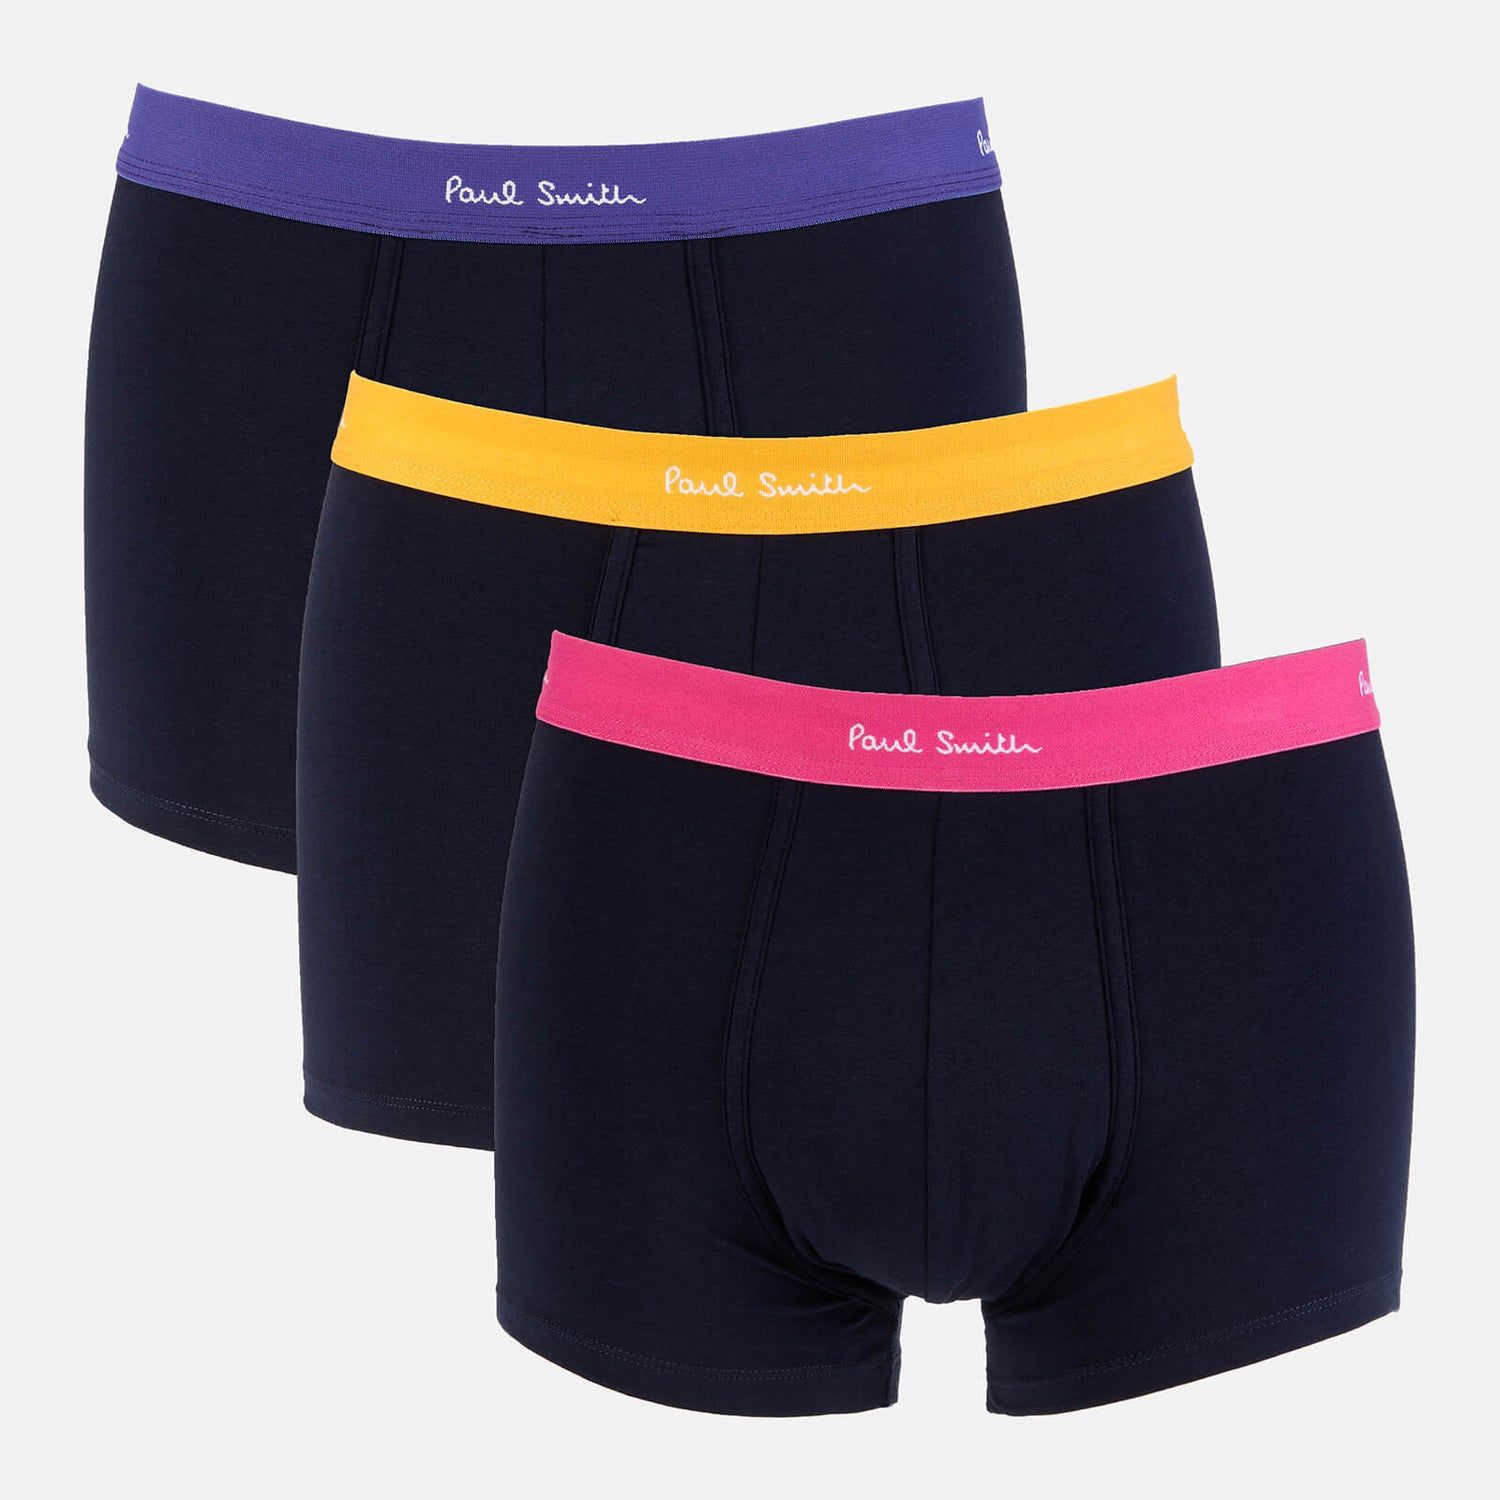 PS Paul Smith Men's 3-Pack Trunk Boxer Shorts - Navy/Multi